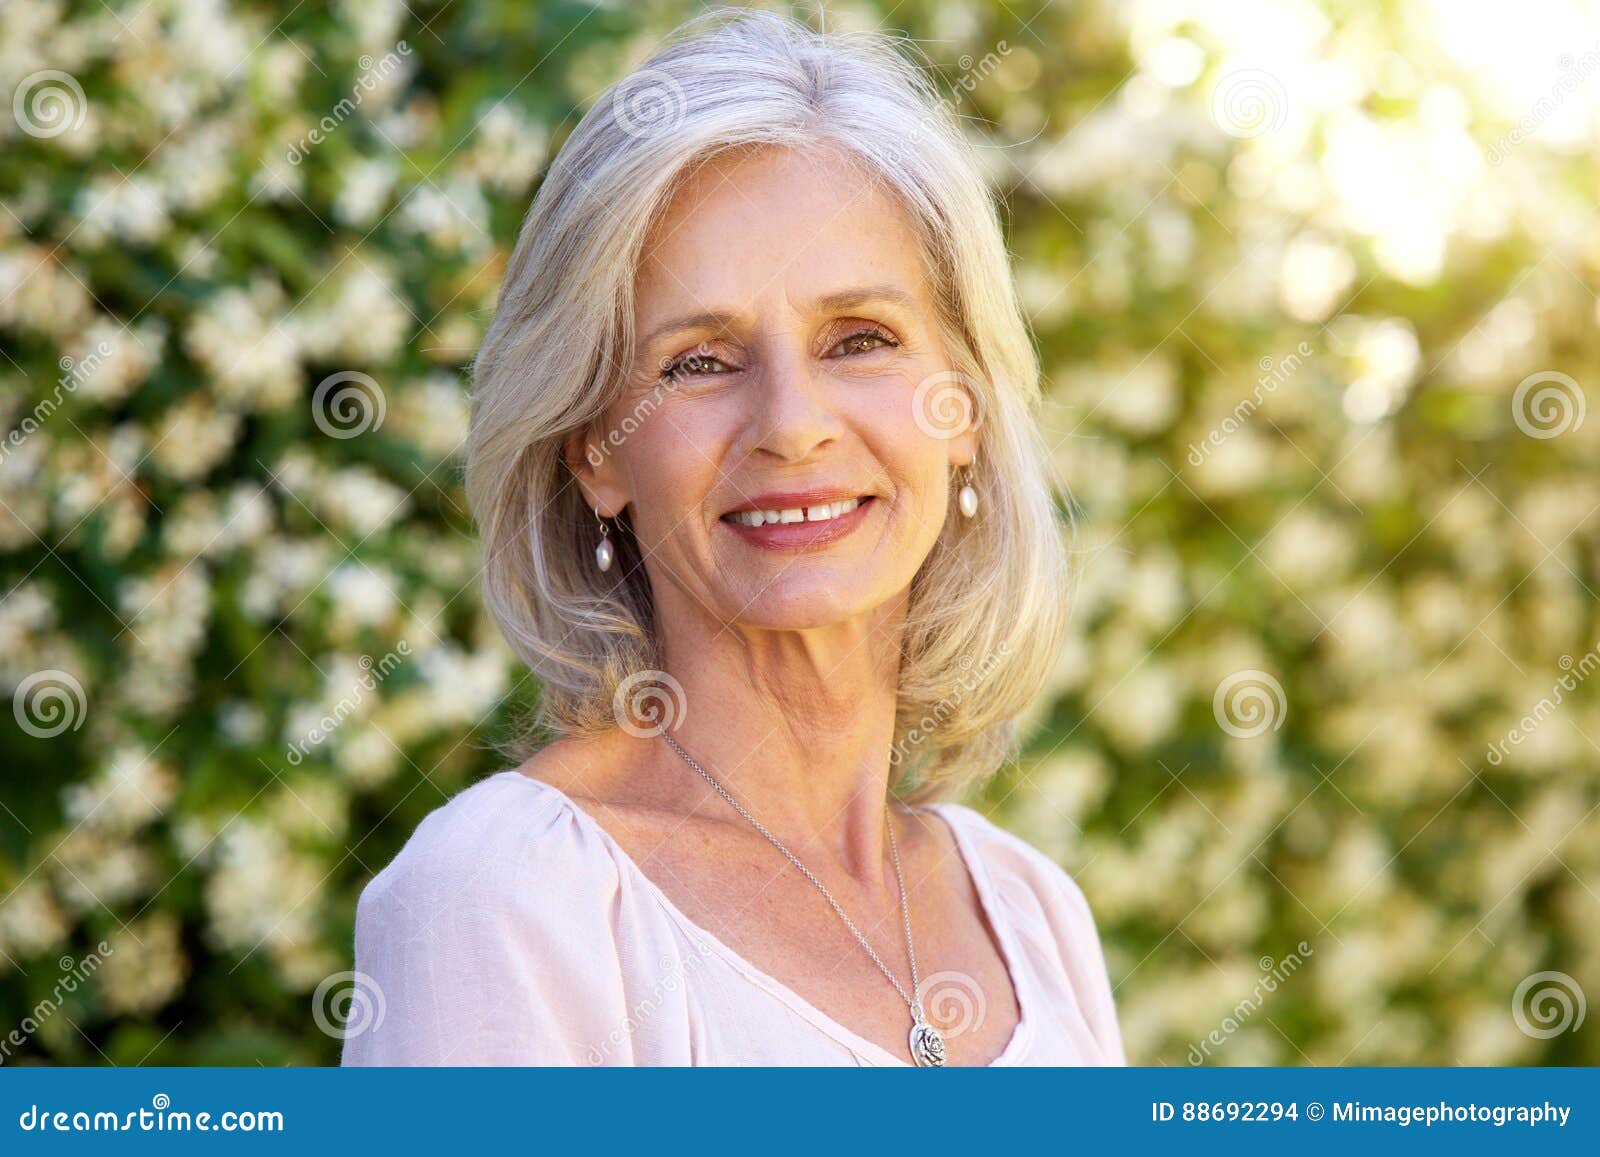 portrait of happy older woman standing outside in summer